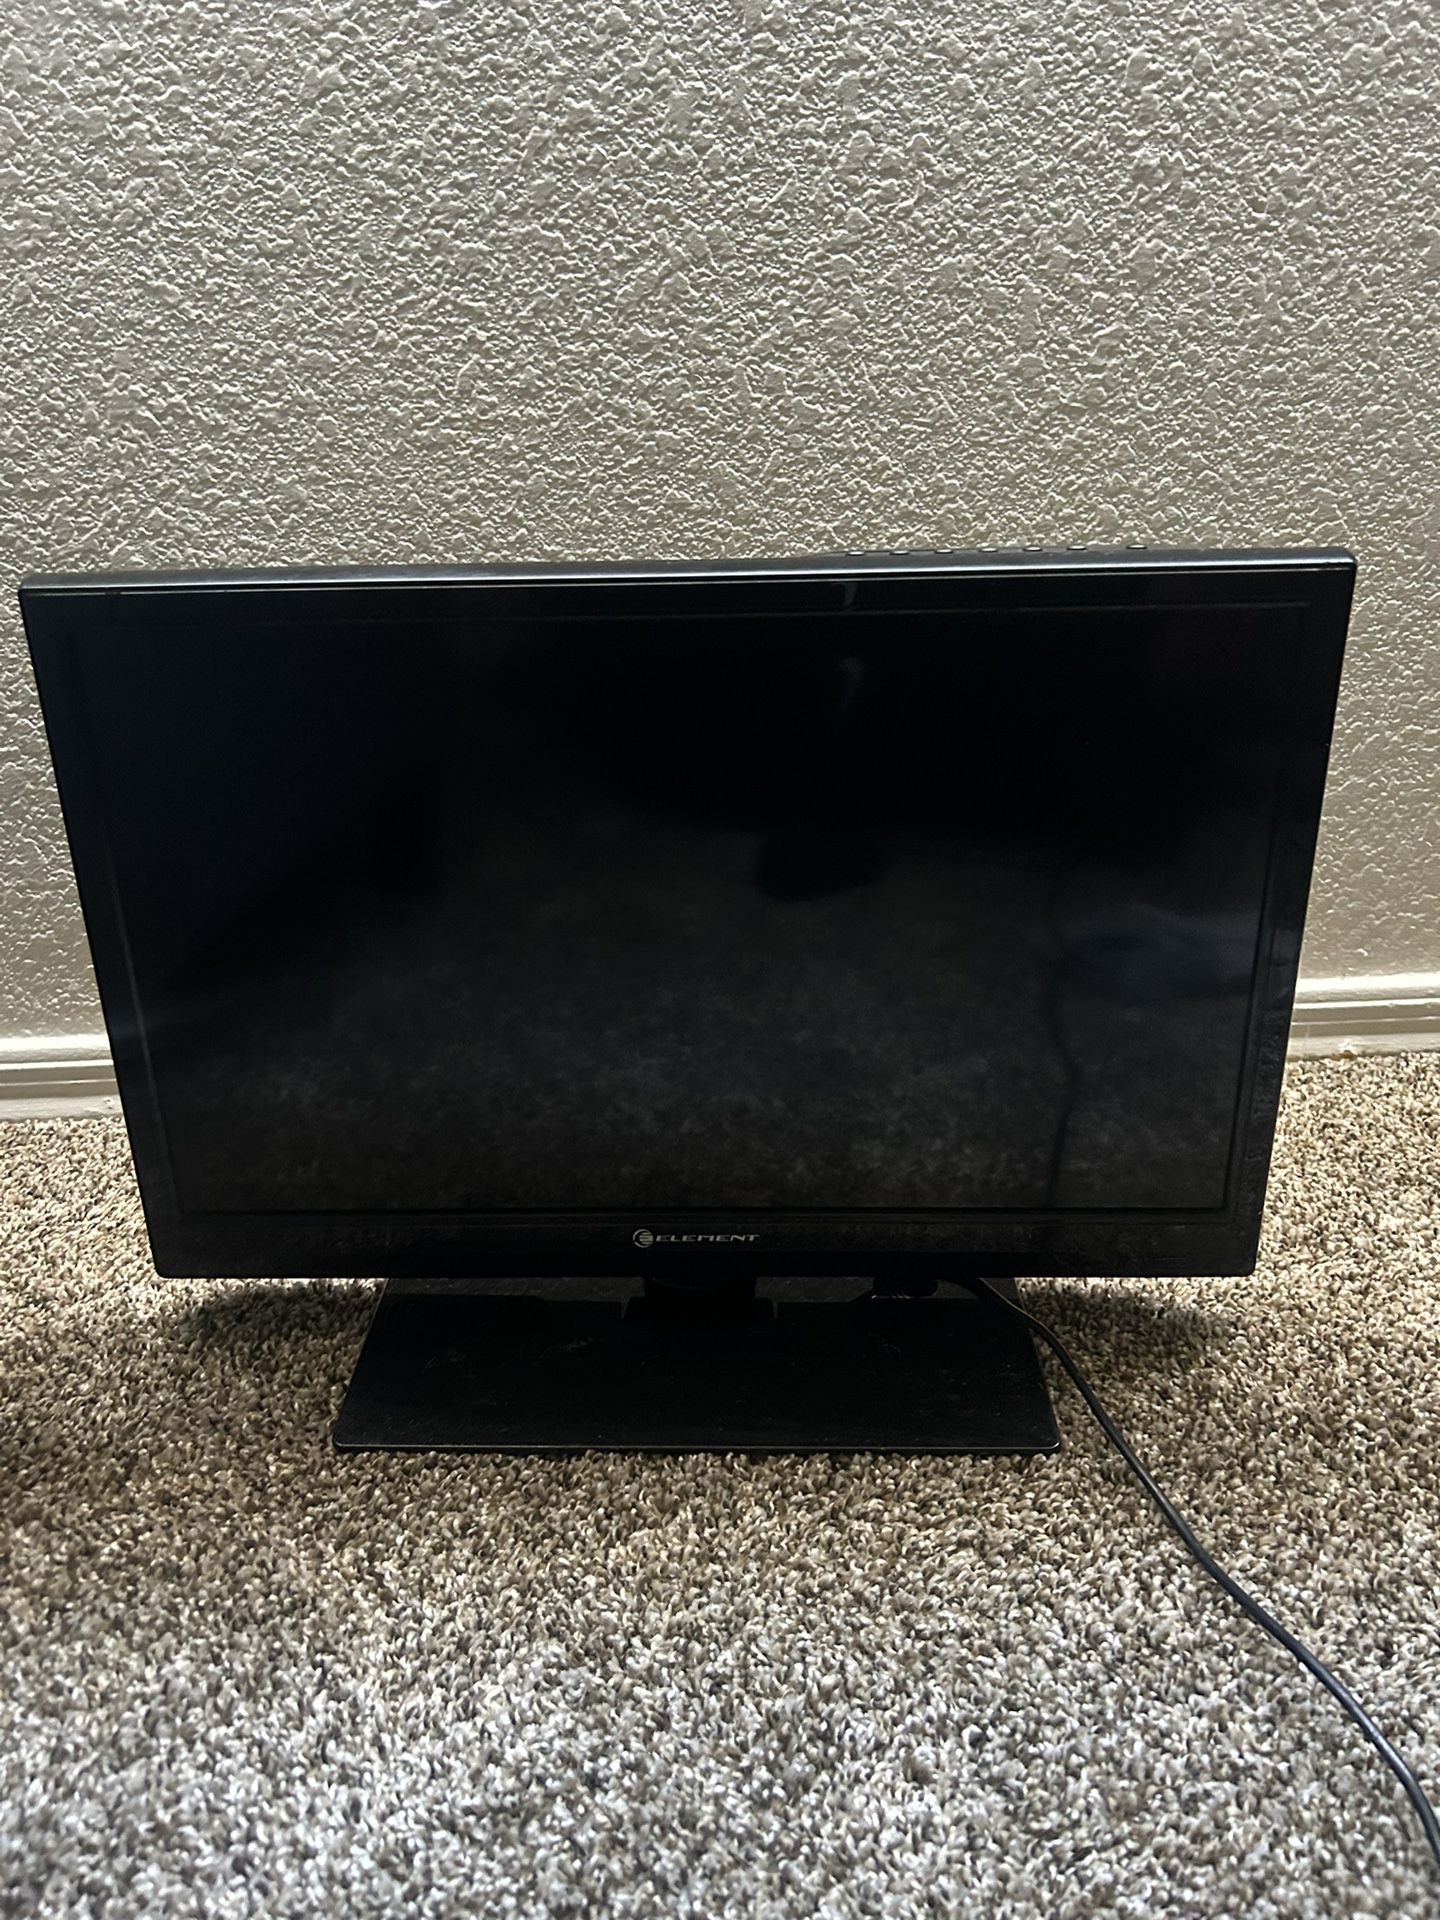 Element 32” 720p 60Hz LED TV